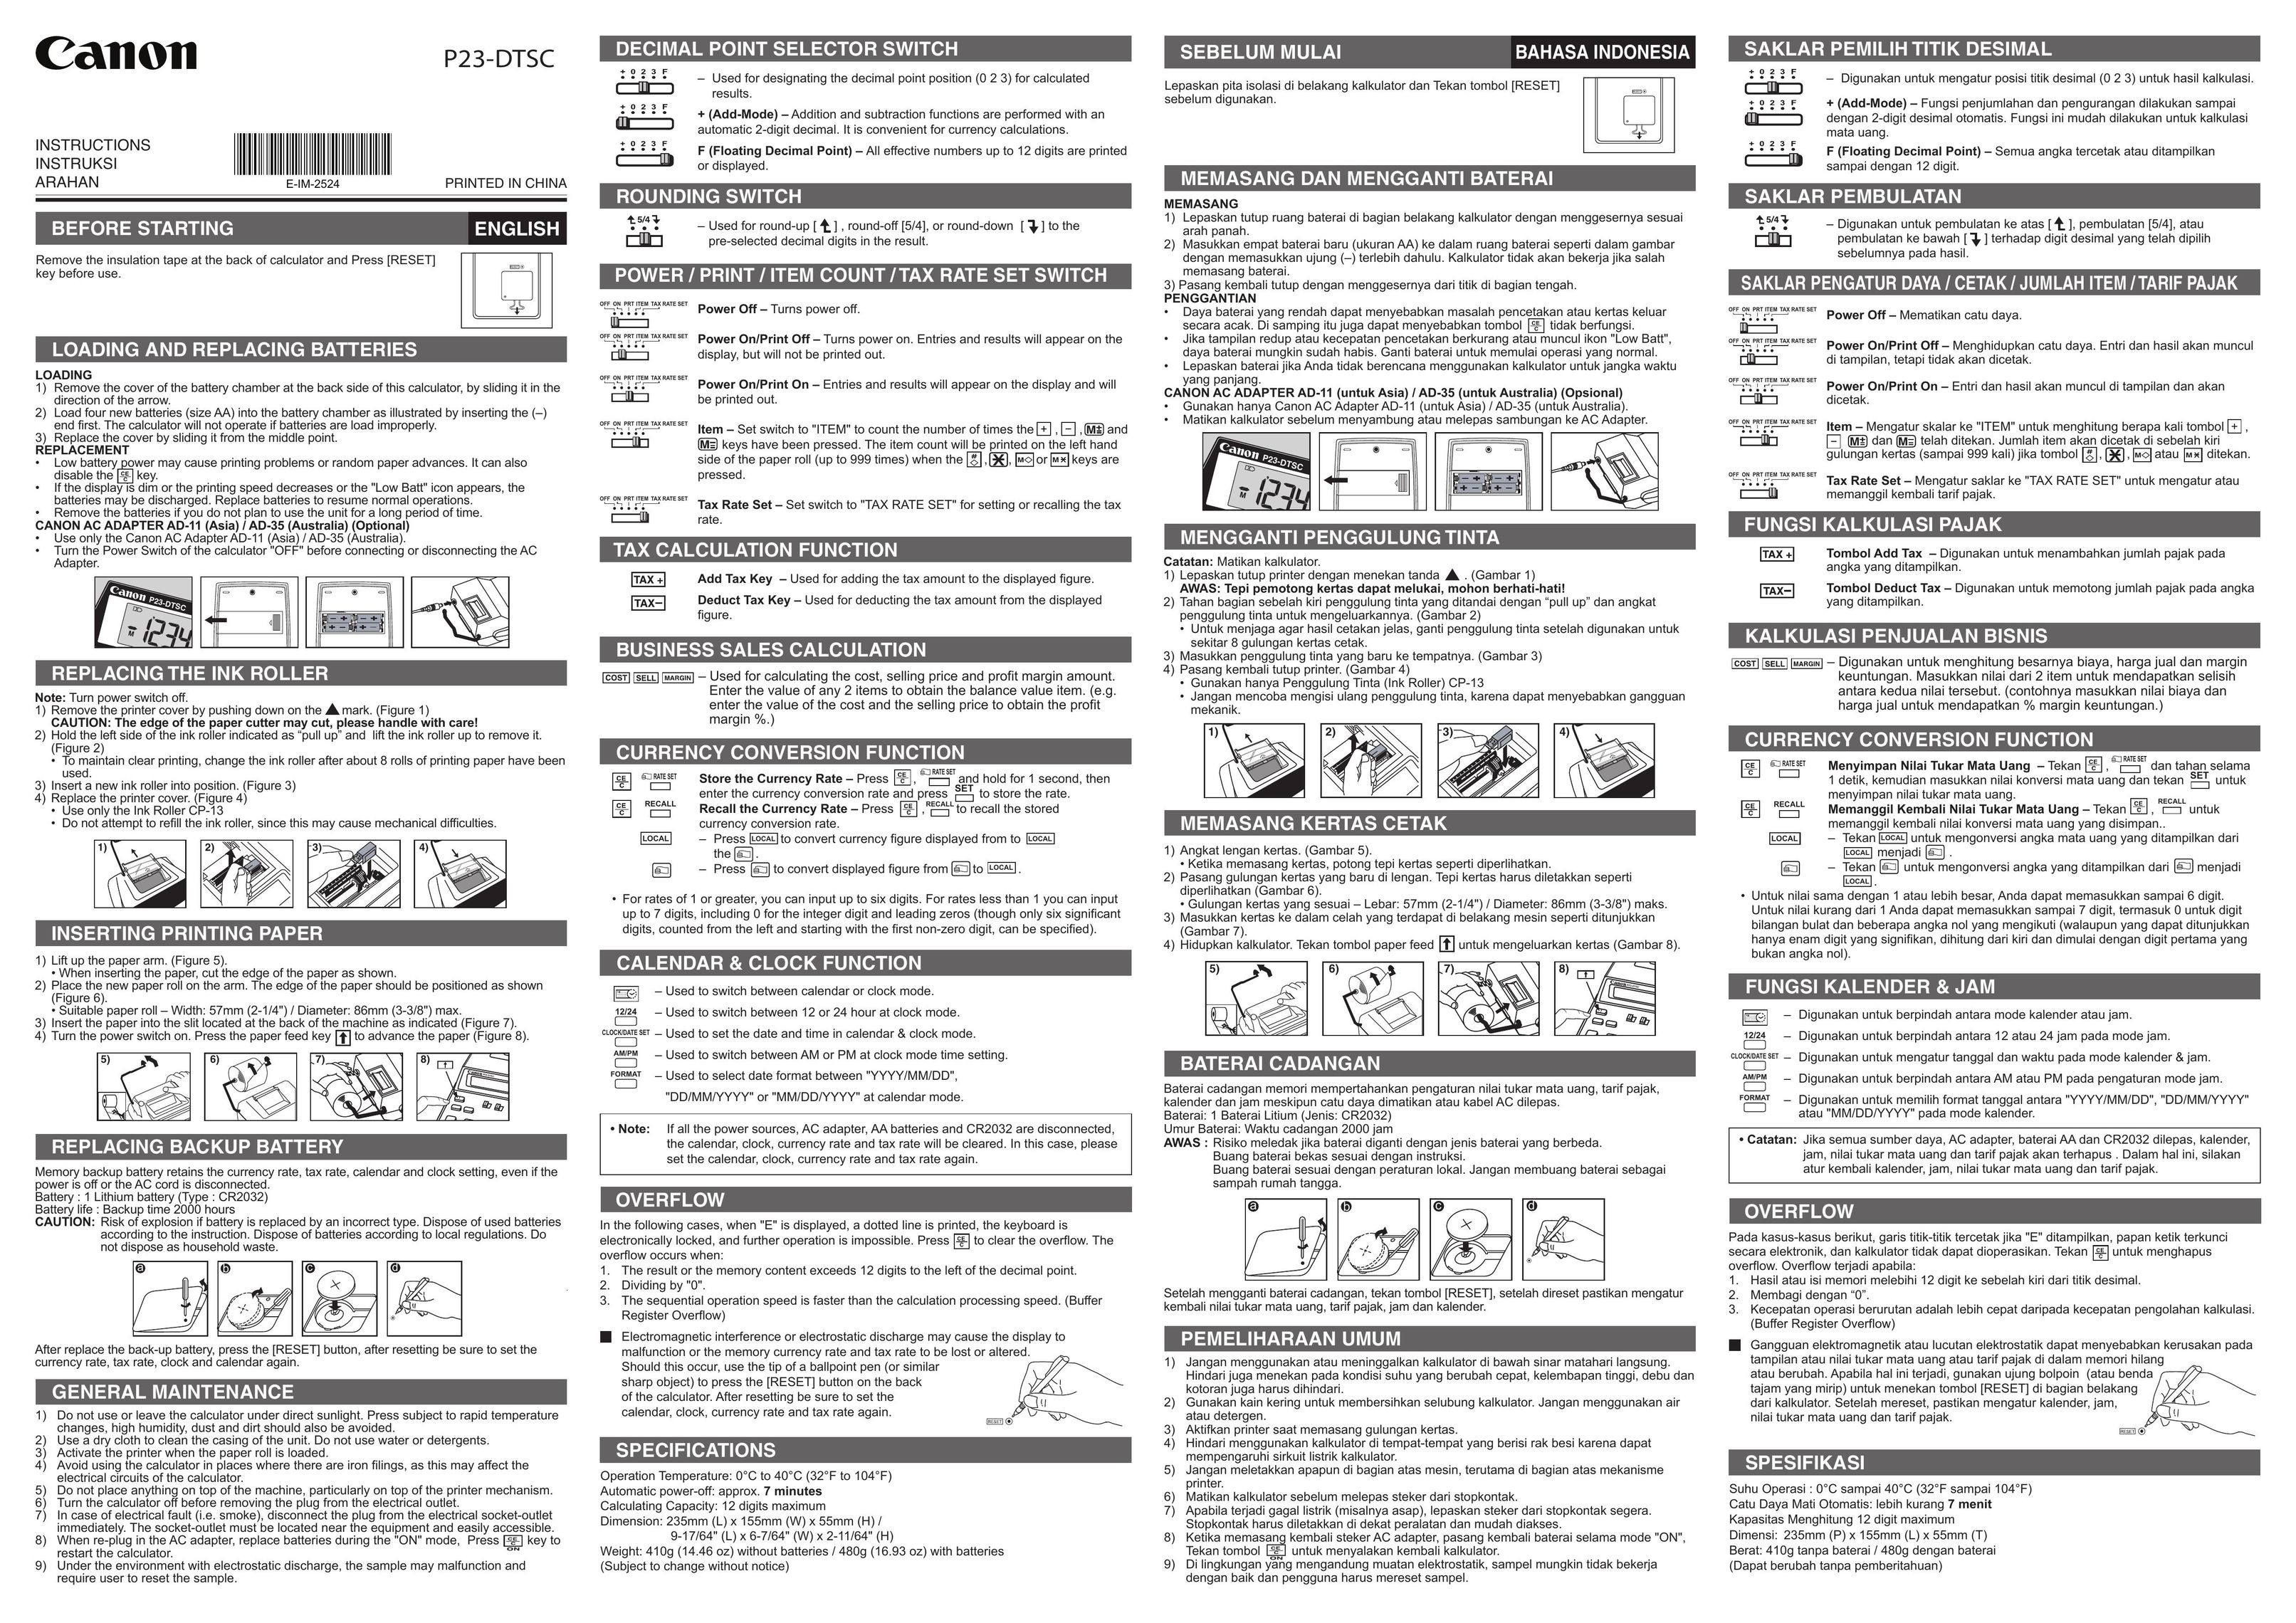 Canon P23-DTSC Calculator User Manual